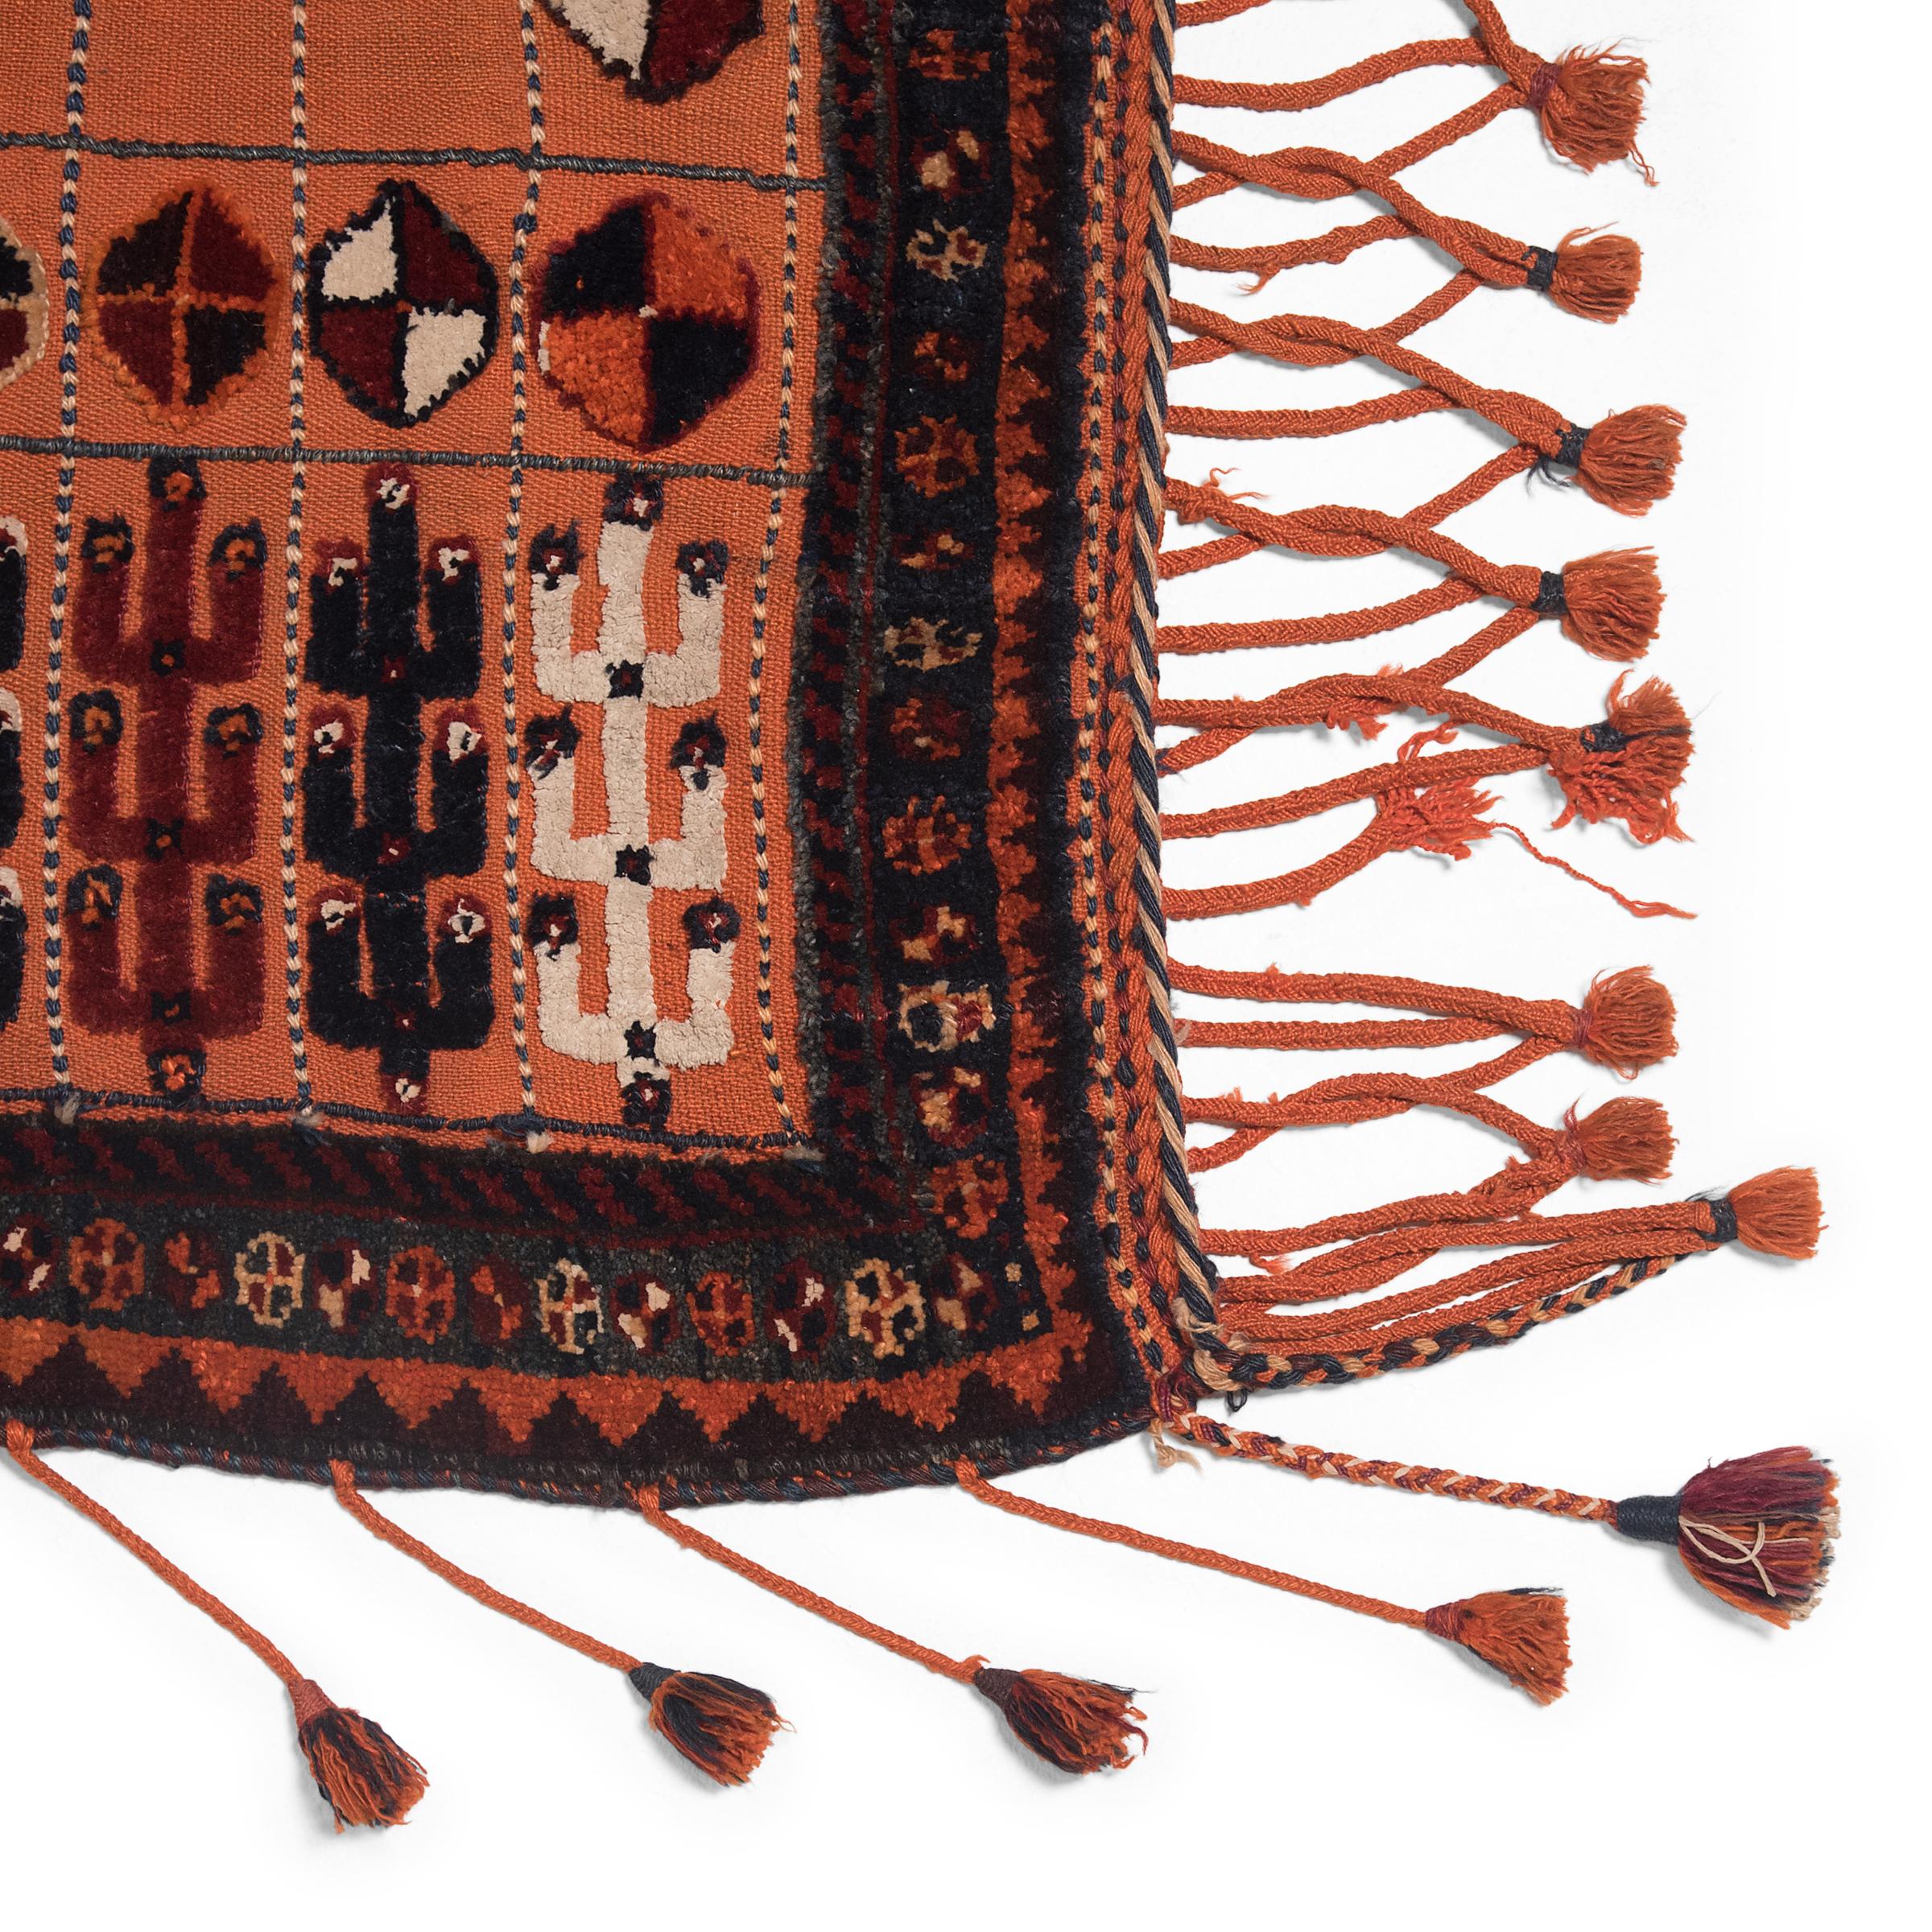 Central Asian Antique Turkmen Horse Cover Blanket with Tassel Fringe